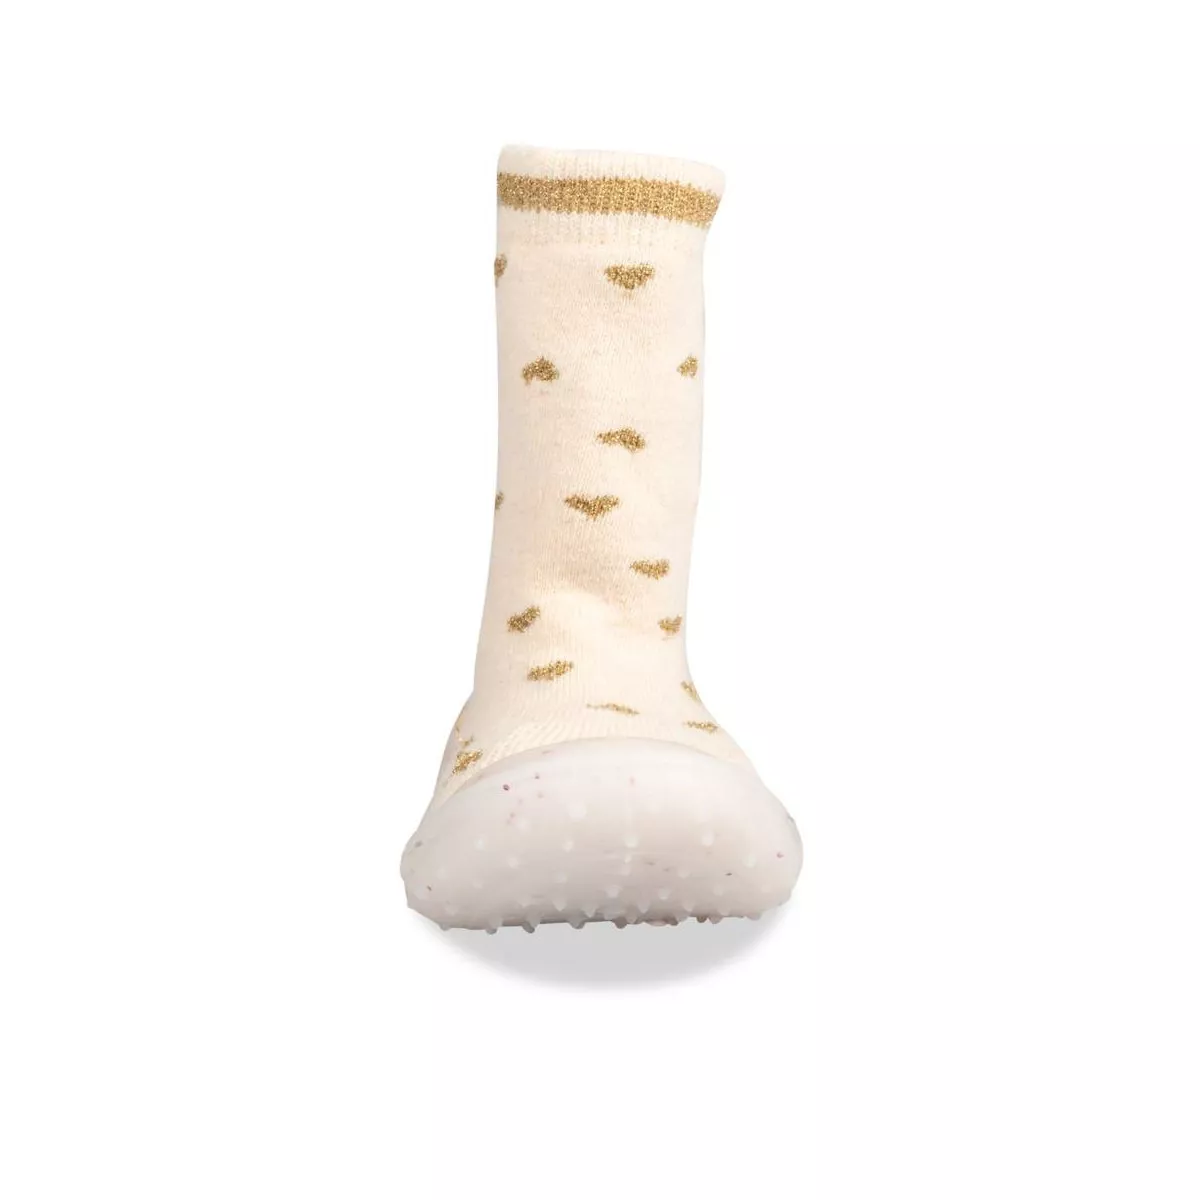 Chaussons chaussettes antidérapants - beige - Kiabi - 8.00€